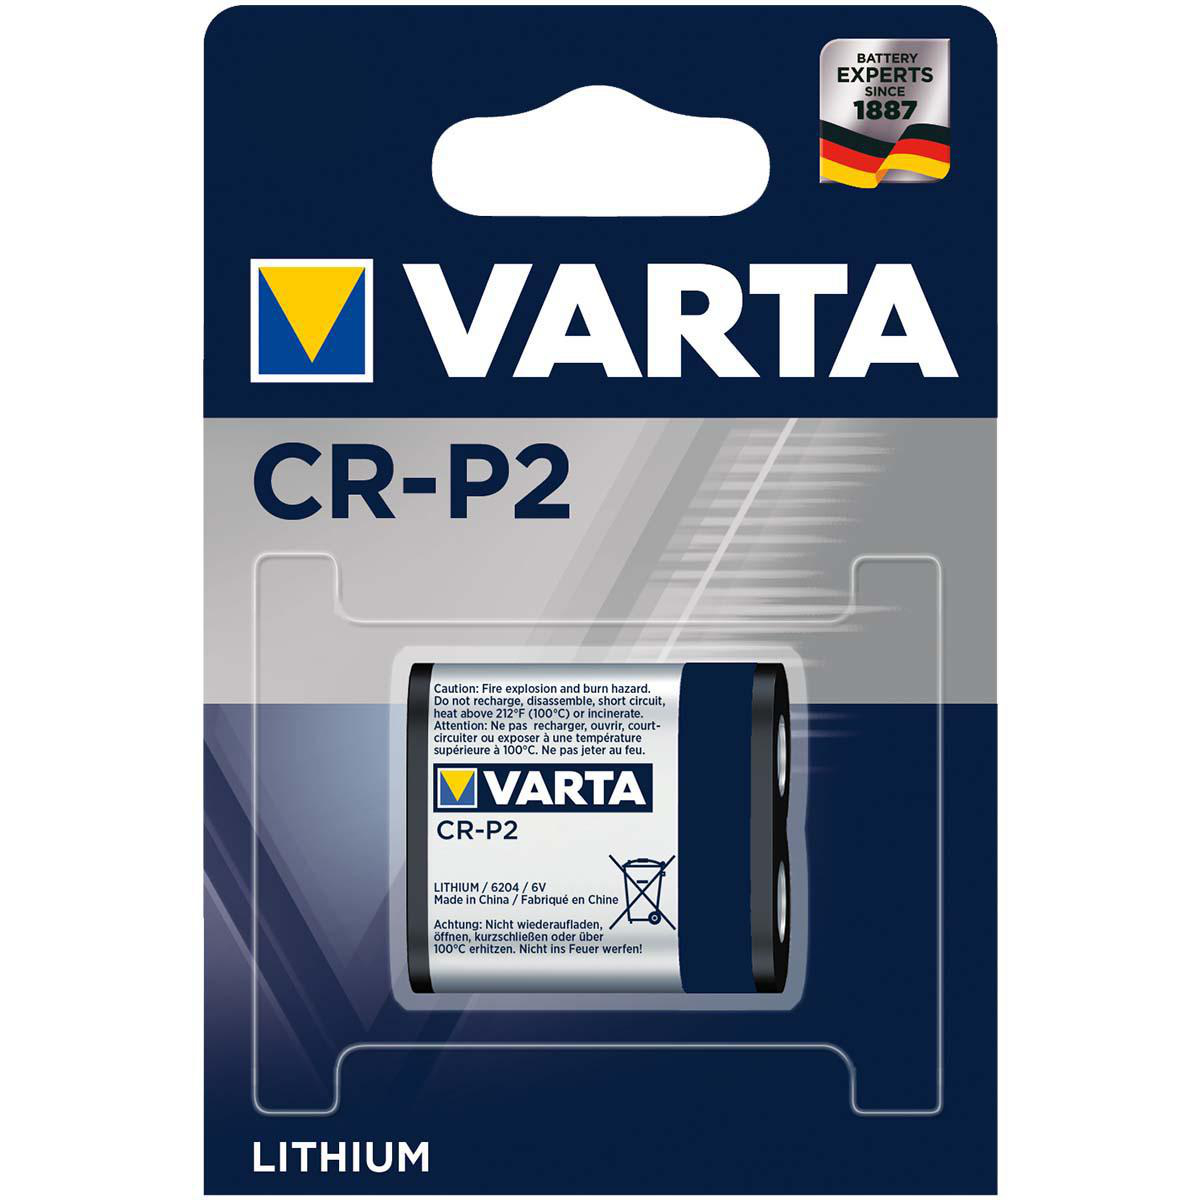 Varta CR-P2 (223) Lithium Battery